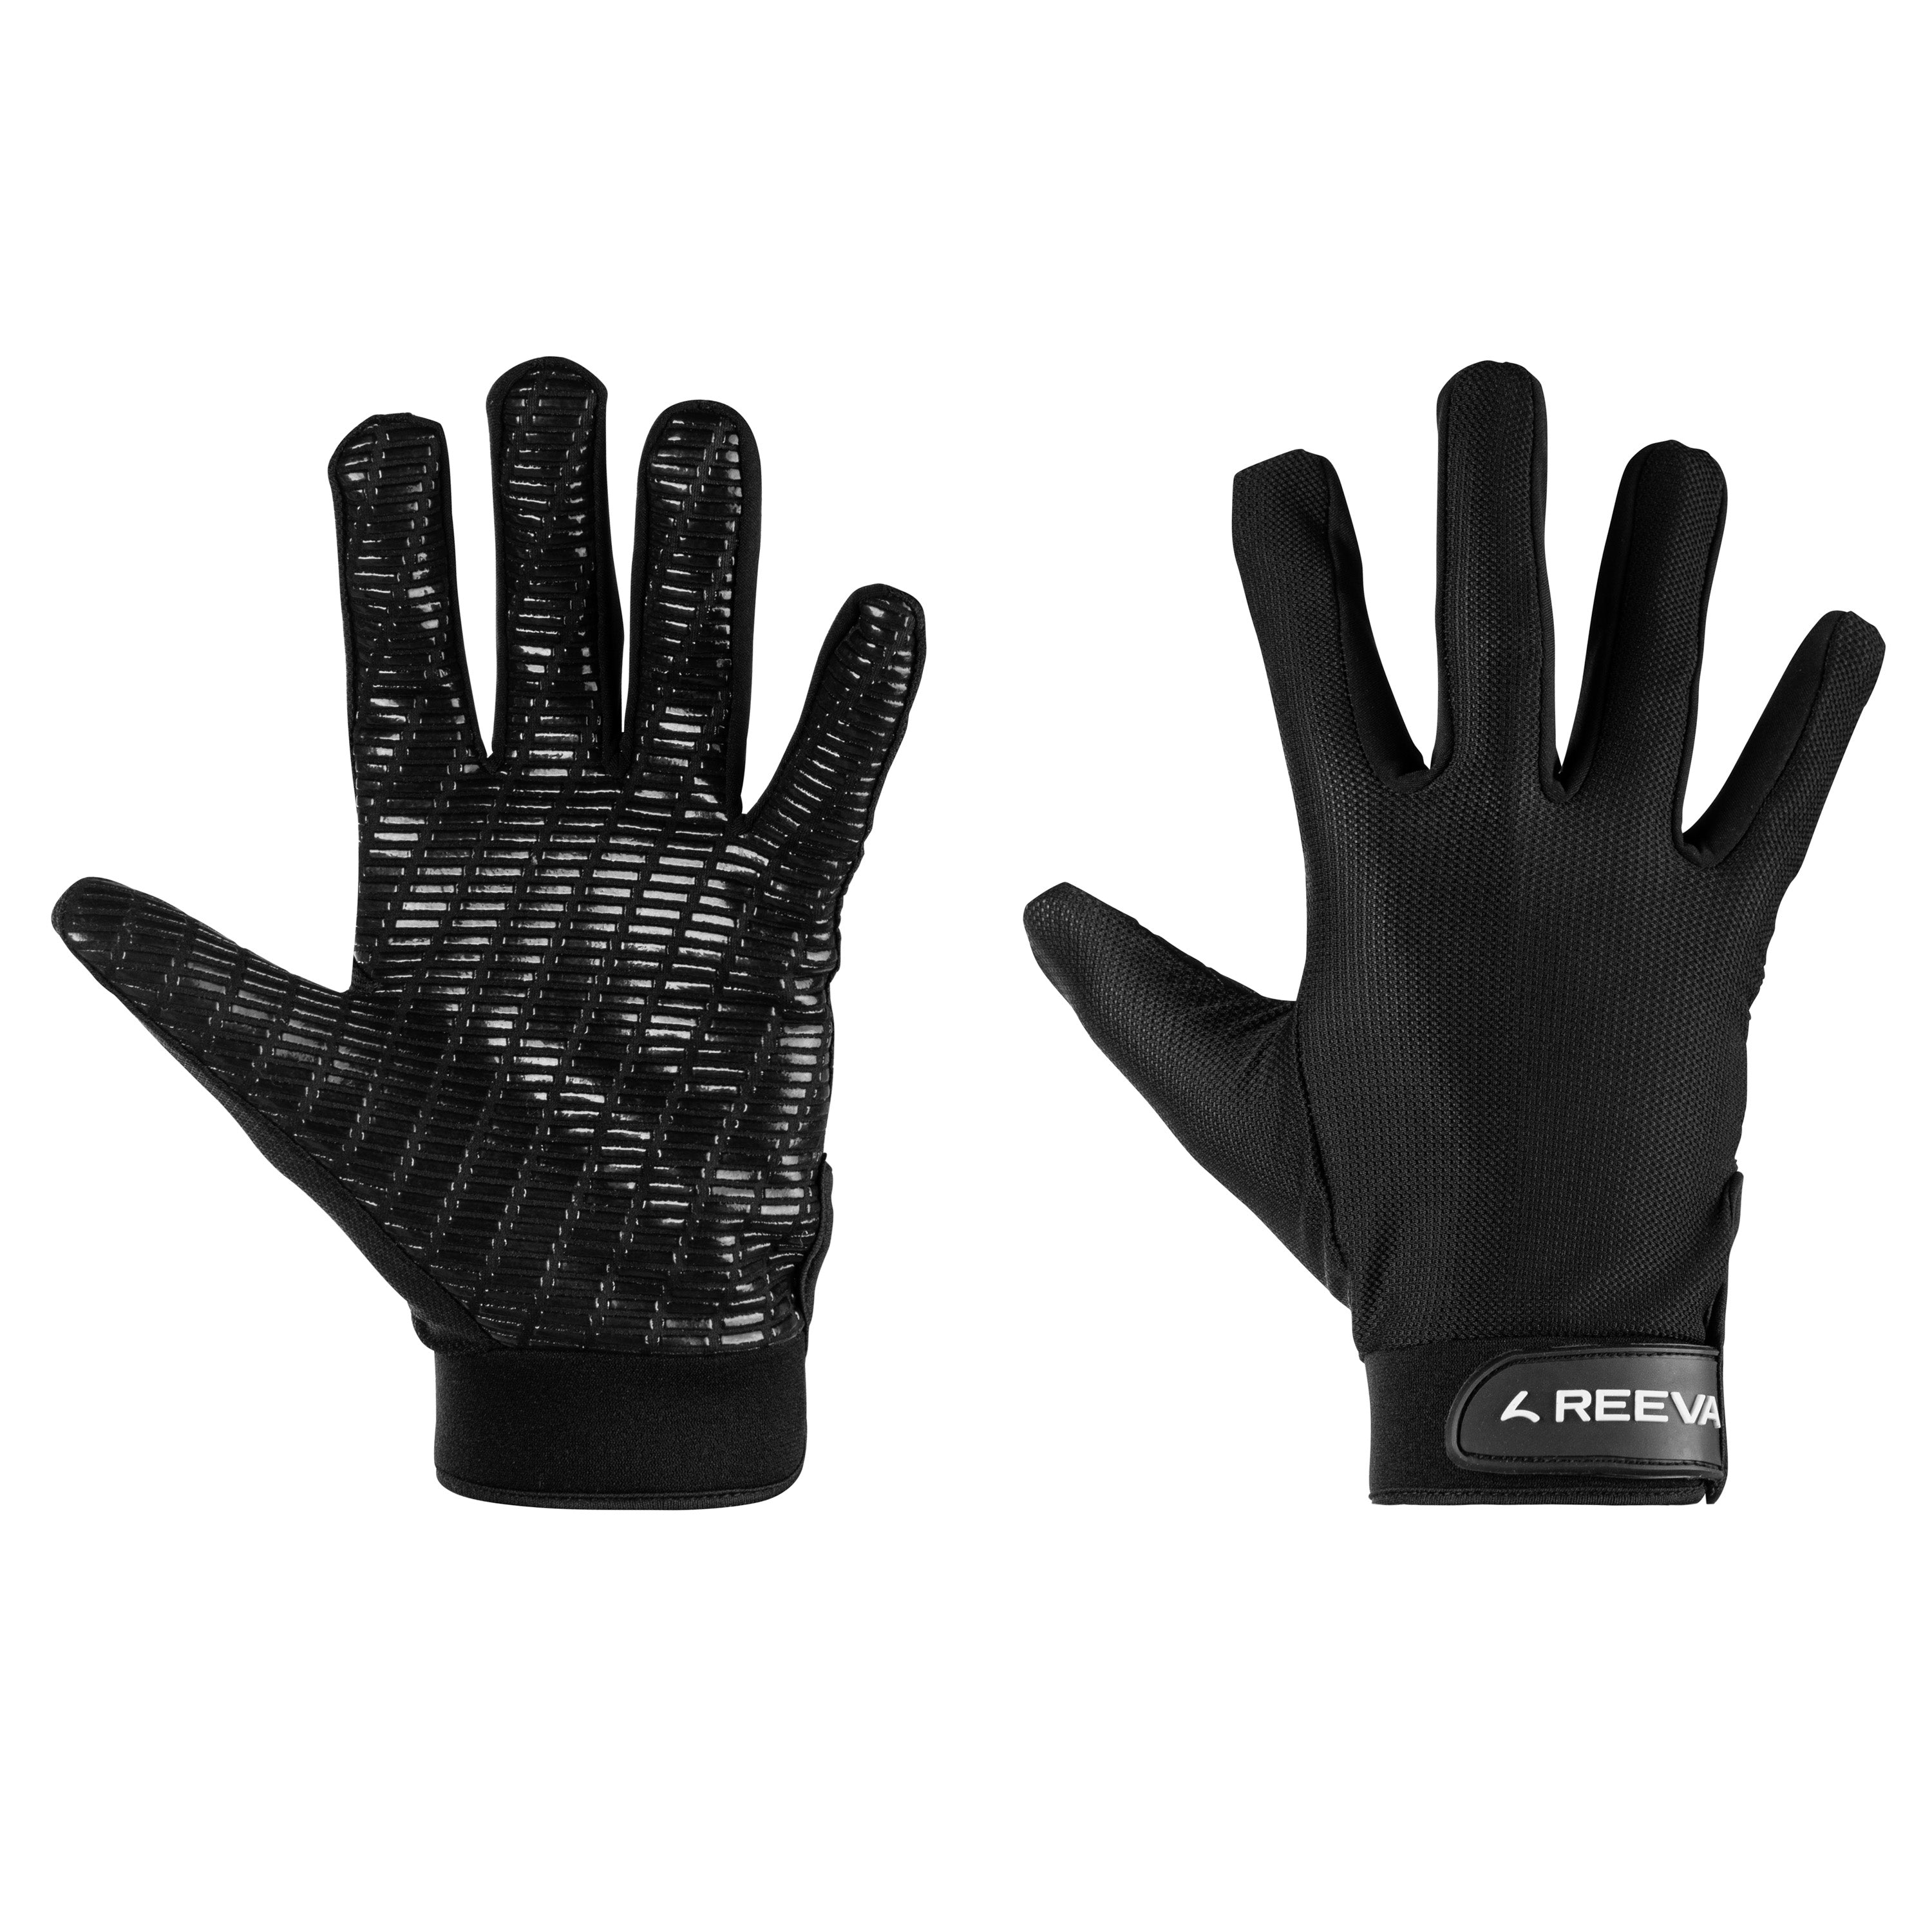 Ultra grip gloves